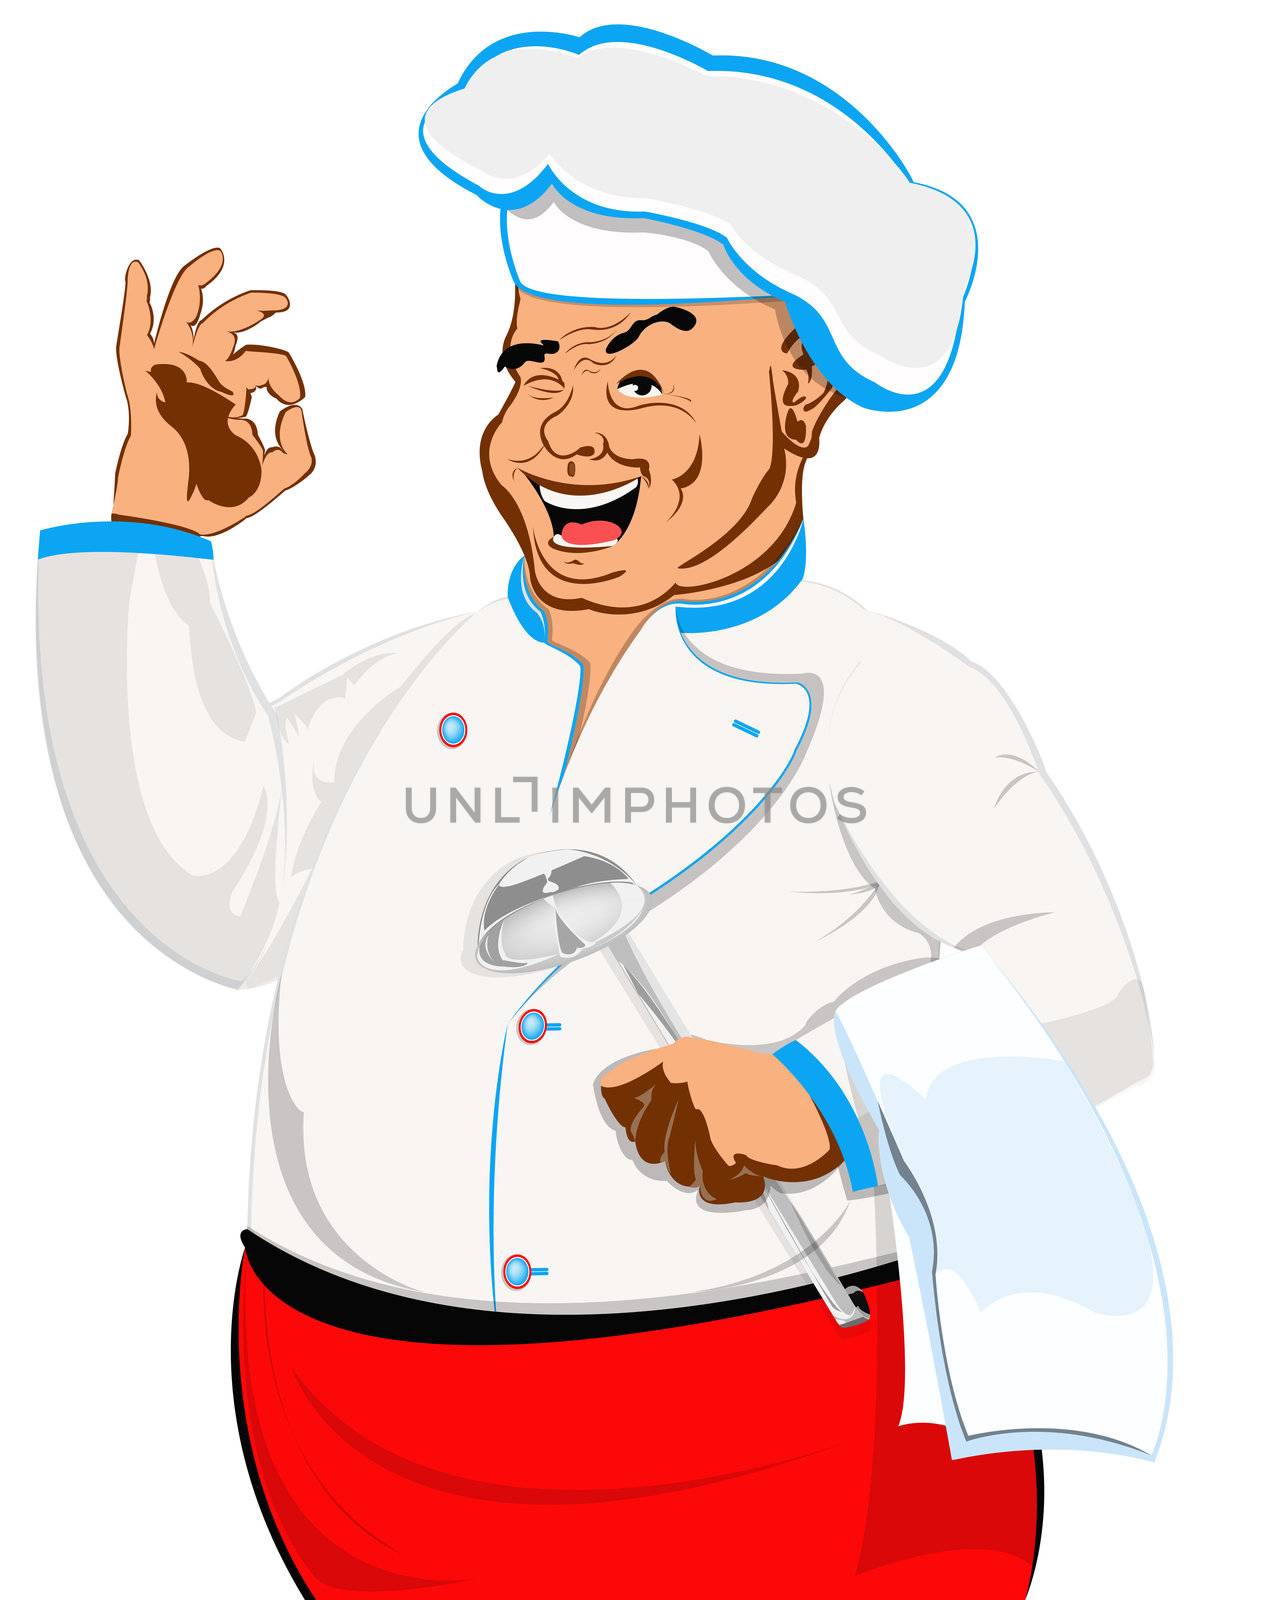 Happy joyful Chef on a white. Restaurant business